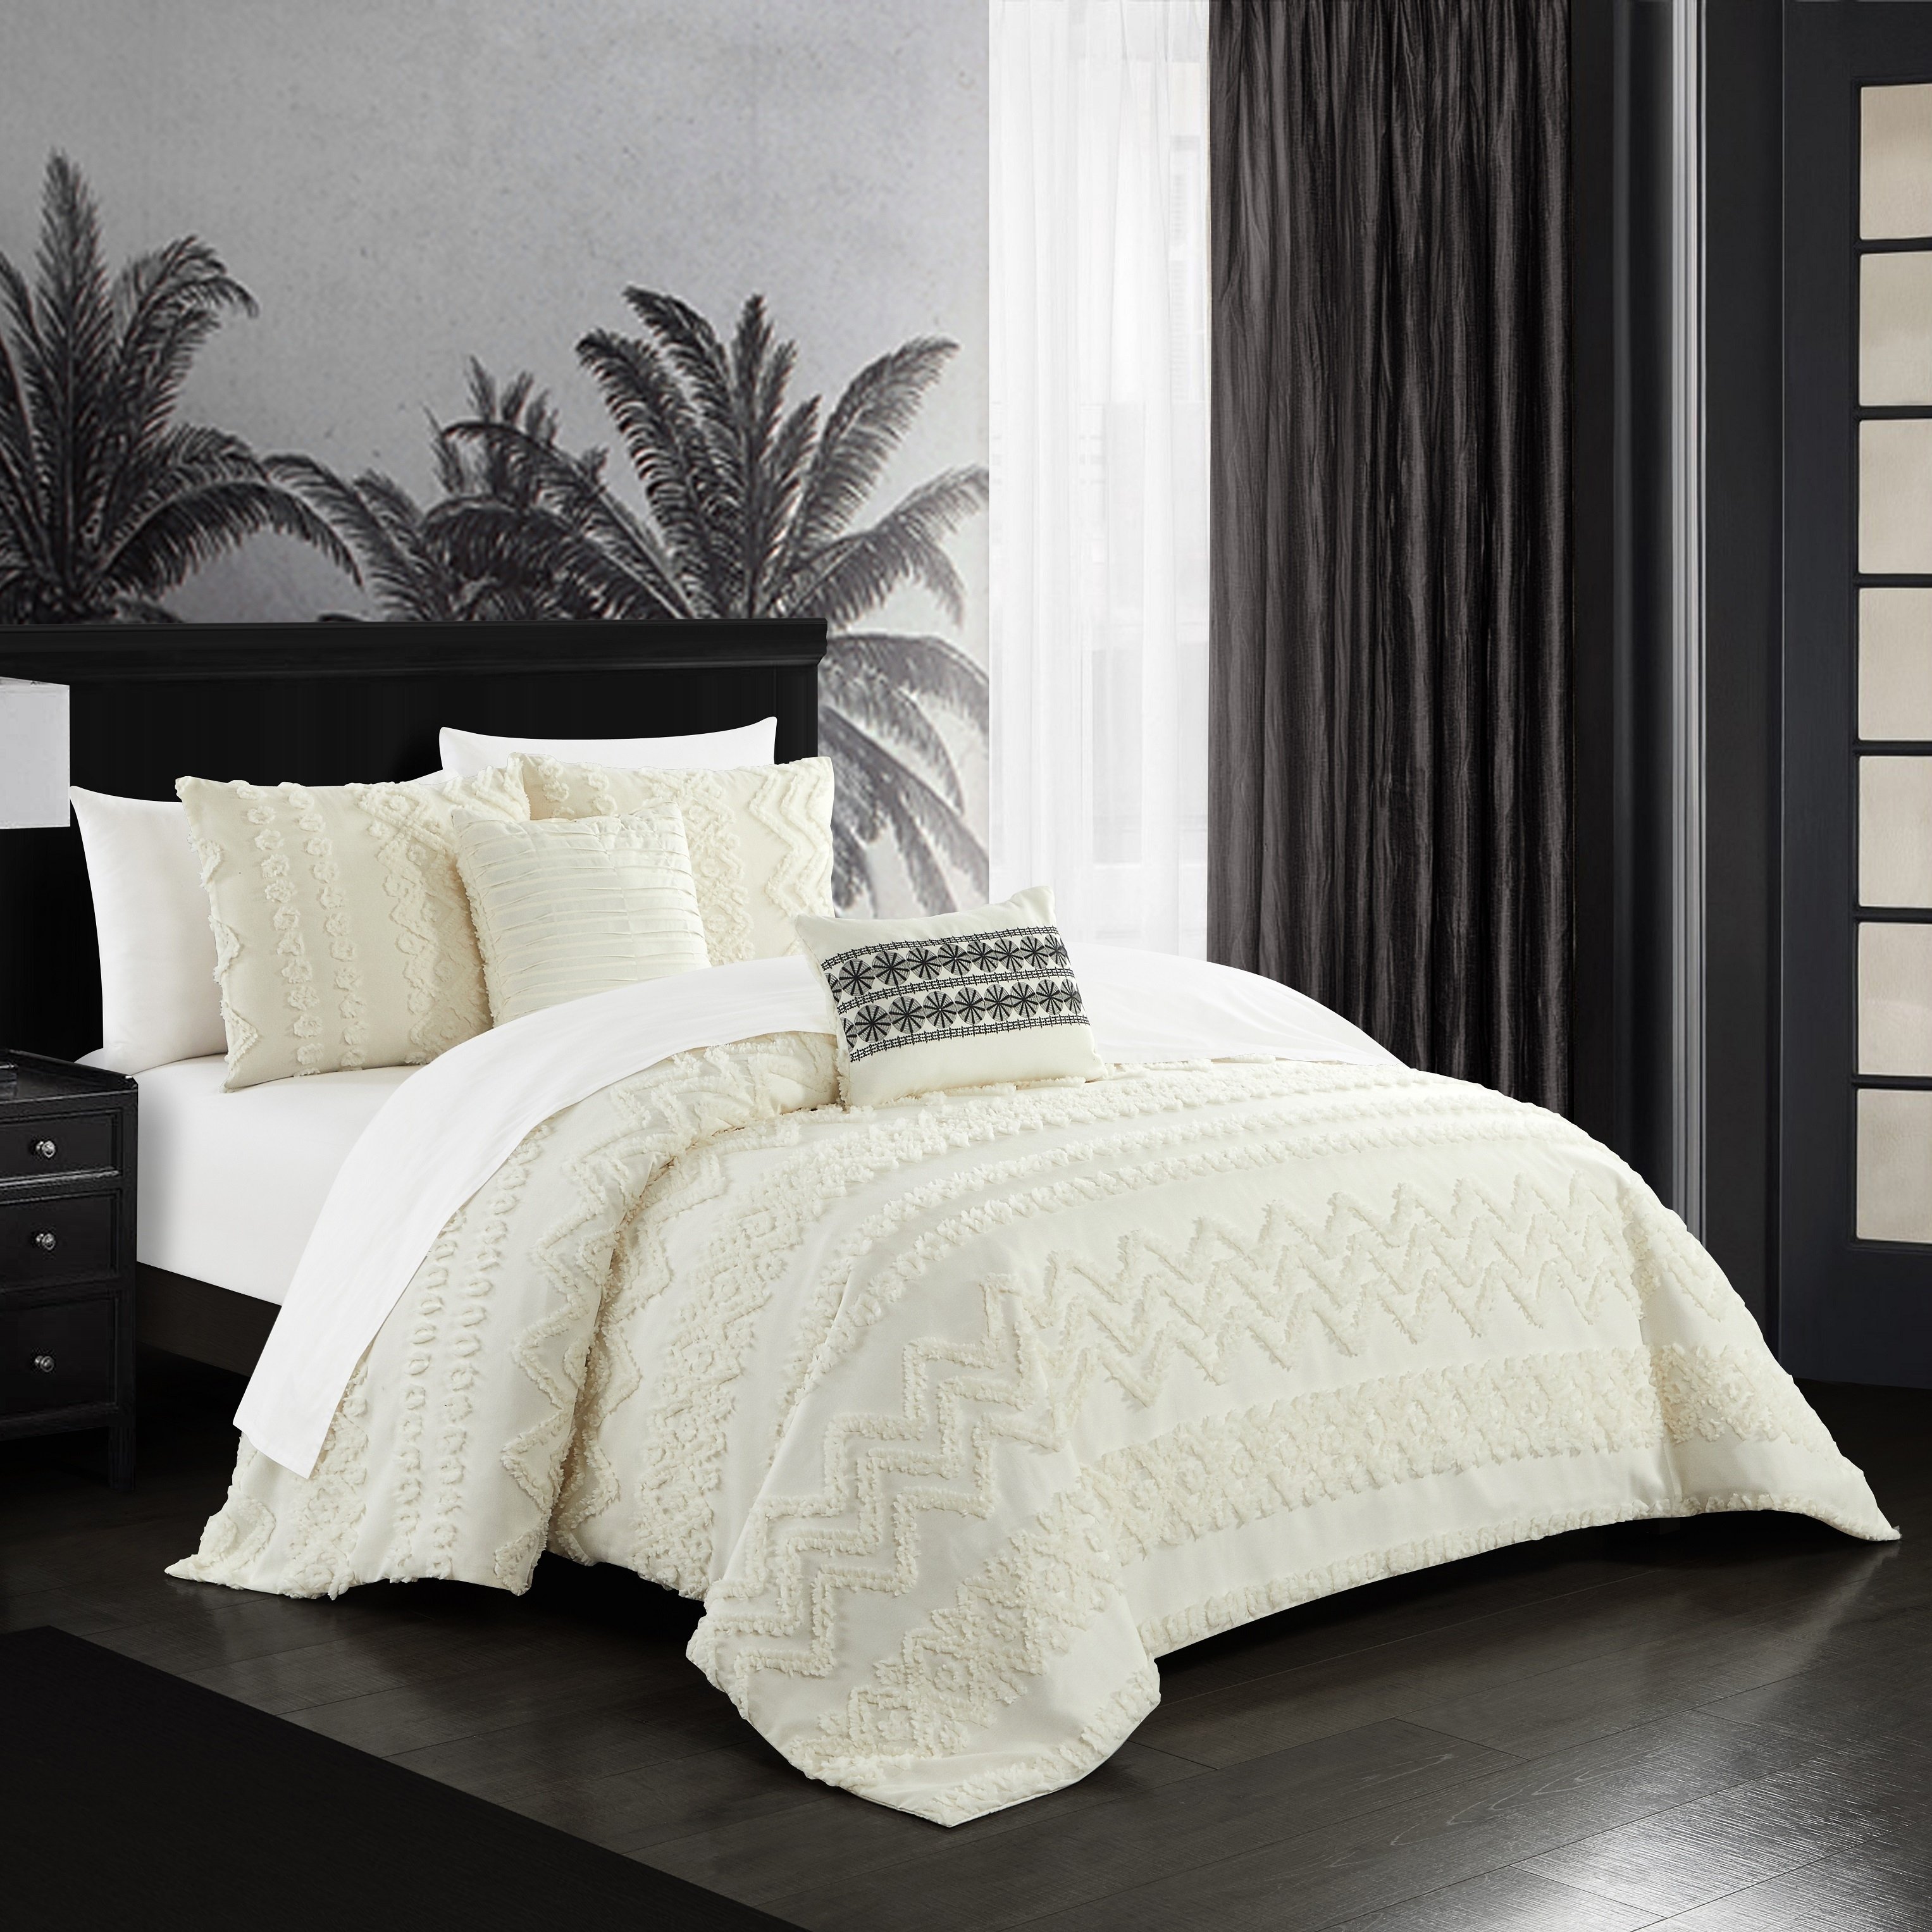 Jenson 5 Piece Comforter Set Jacquard Chevron Geometric Pattern Design Bedding - Grey, King